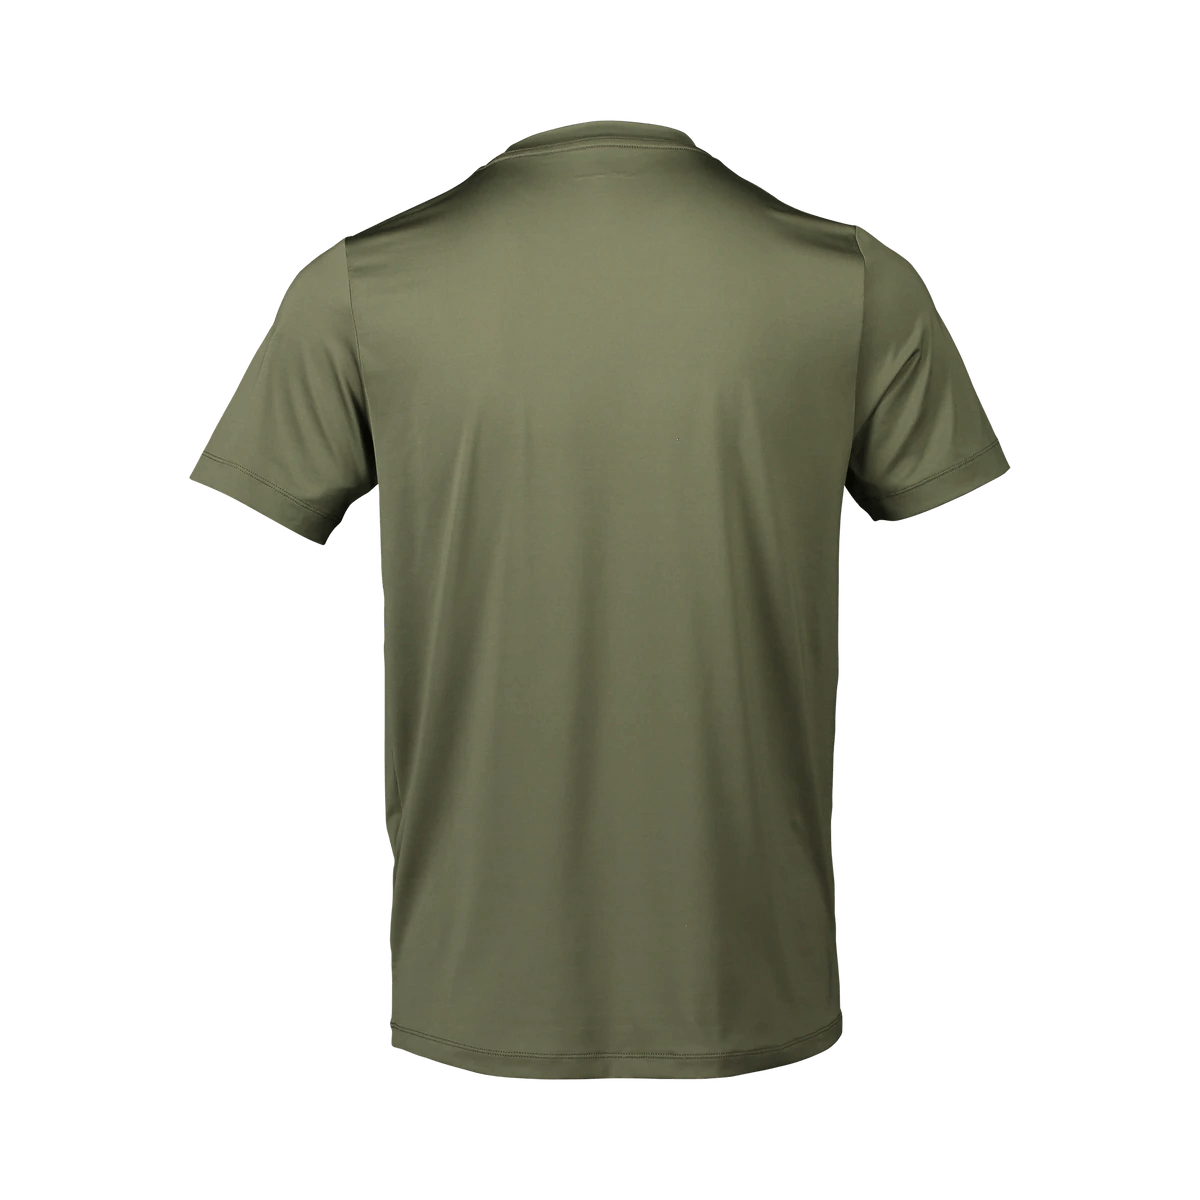 Tシャツ 52901-1460 エンデューロライトティー M's Reform Enduro Light Tee - Epidote Green [メンズ]